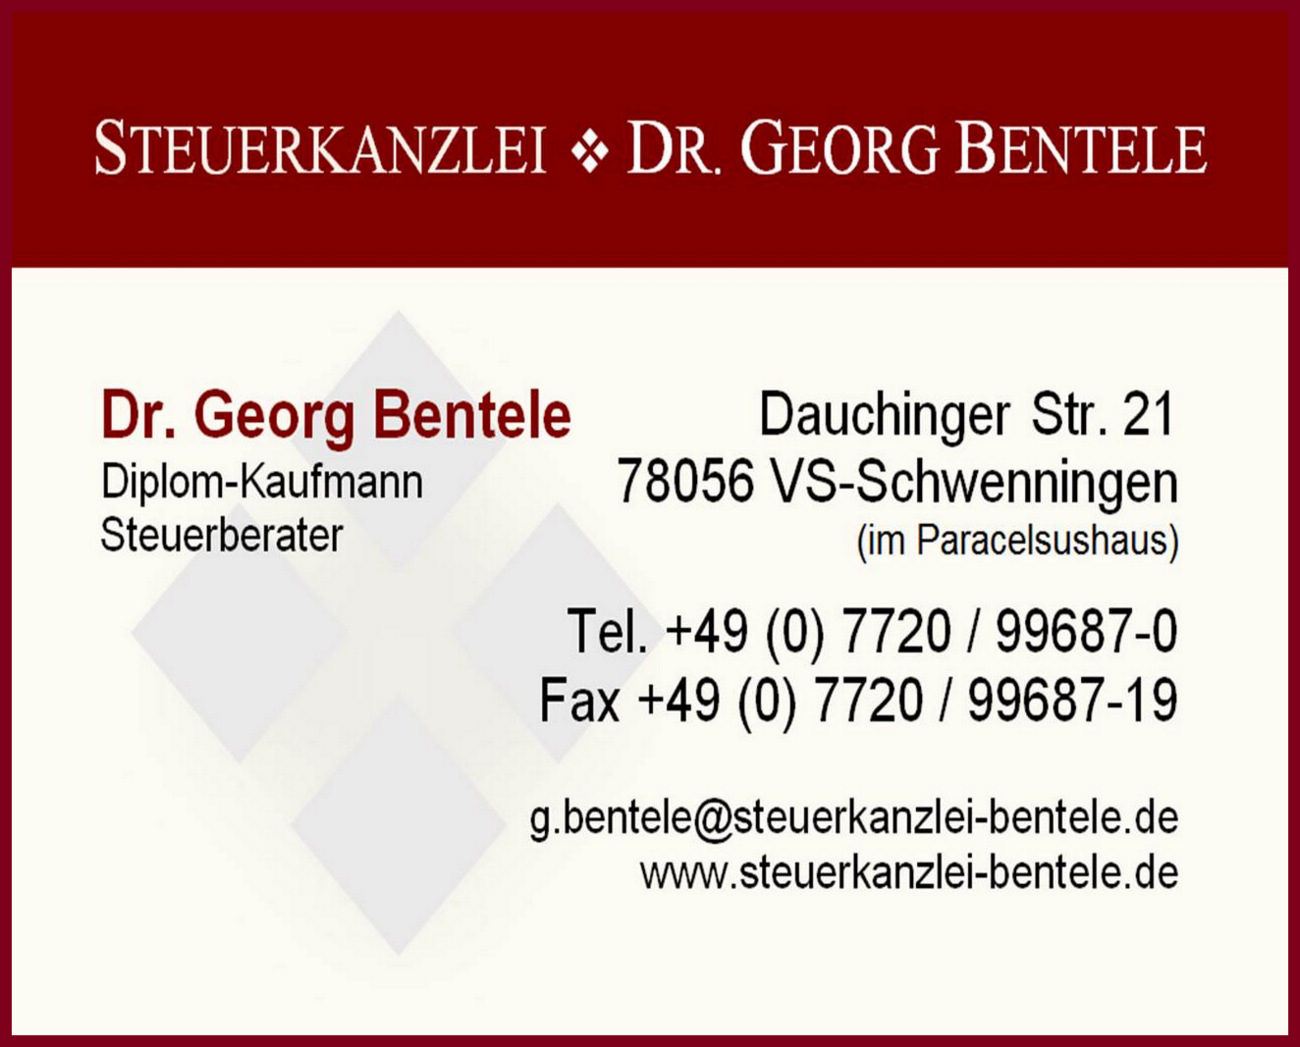 Steuerkanzlei Dr. Georg Bentele